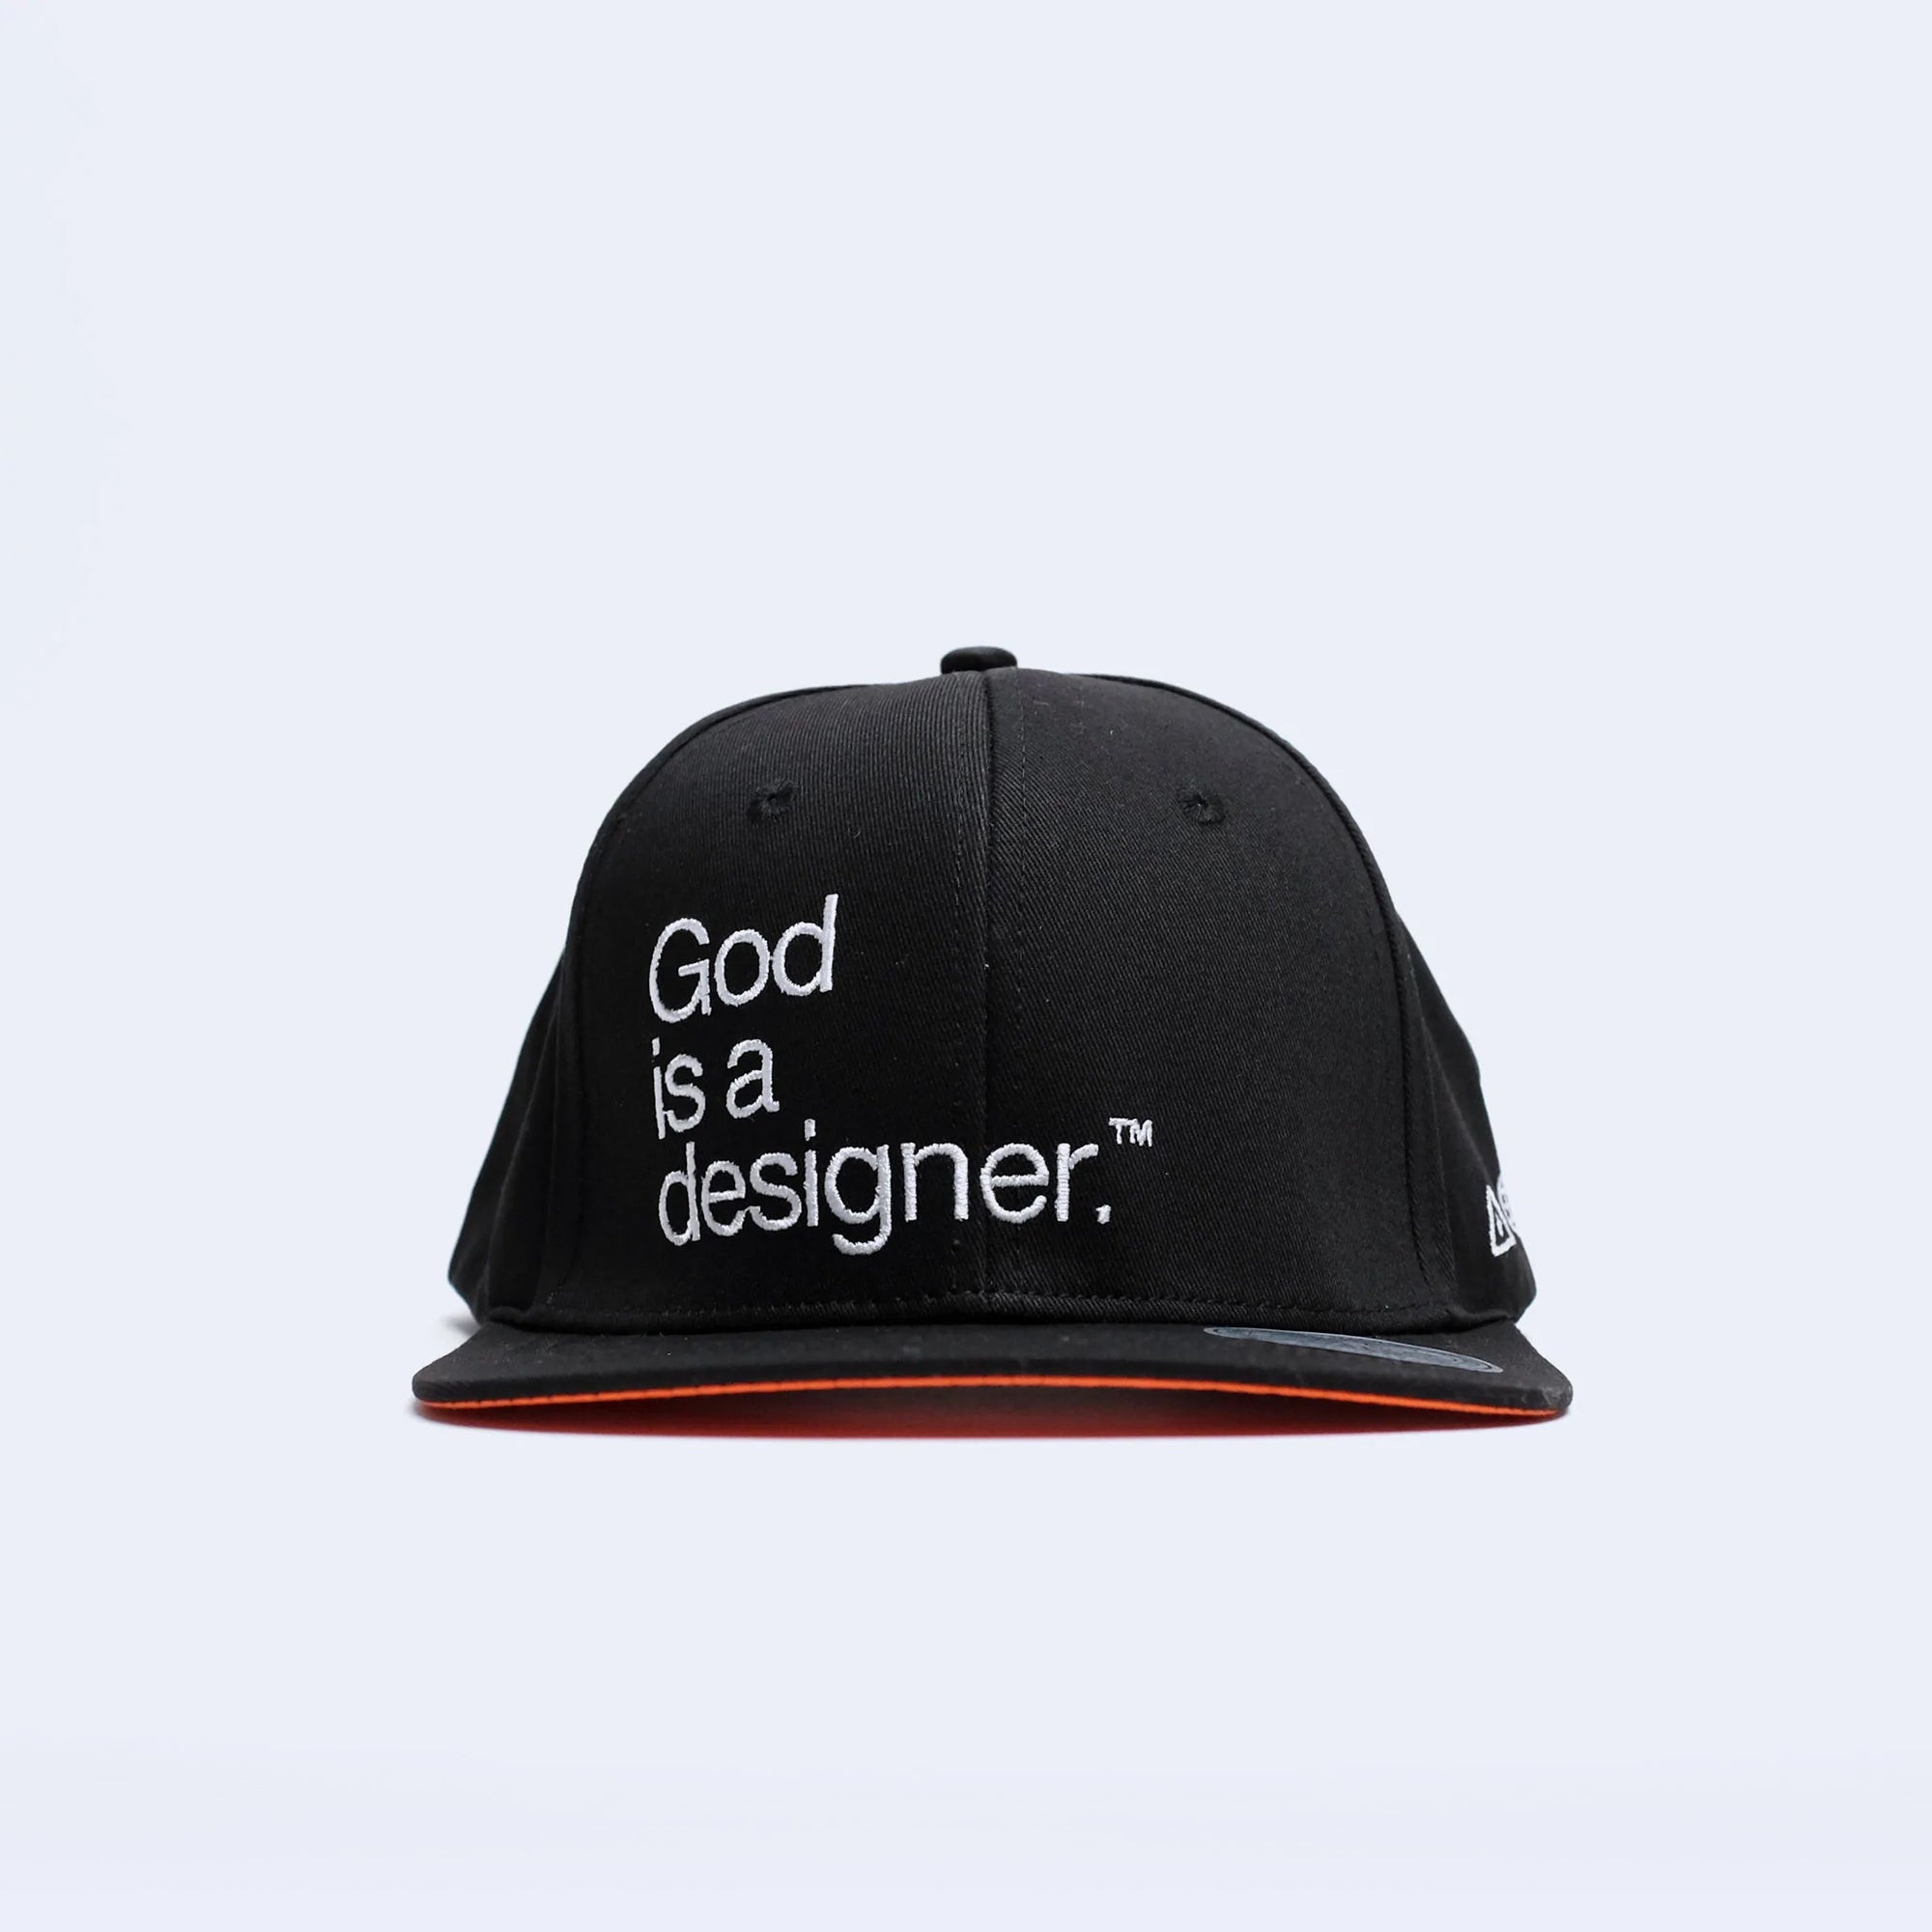 GIAD™ Classic 6-panel Snapback [Black/Orange] - God is a designer.®